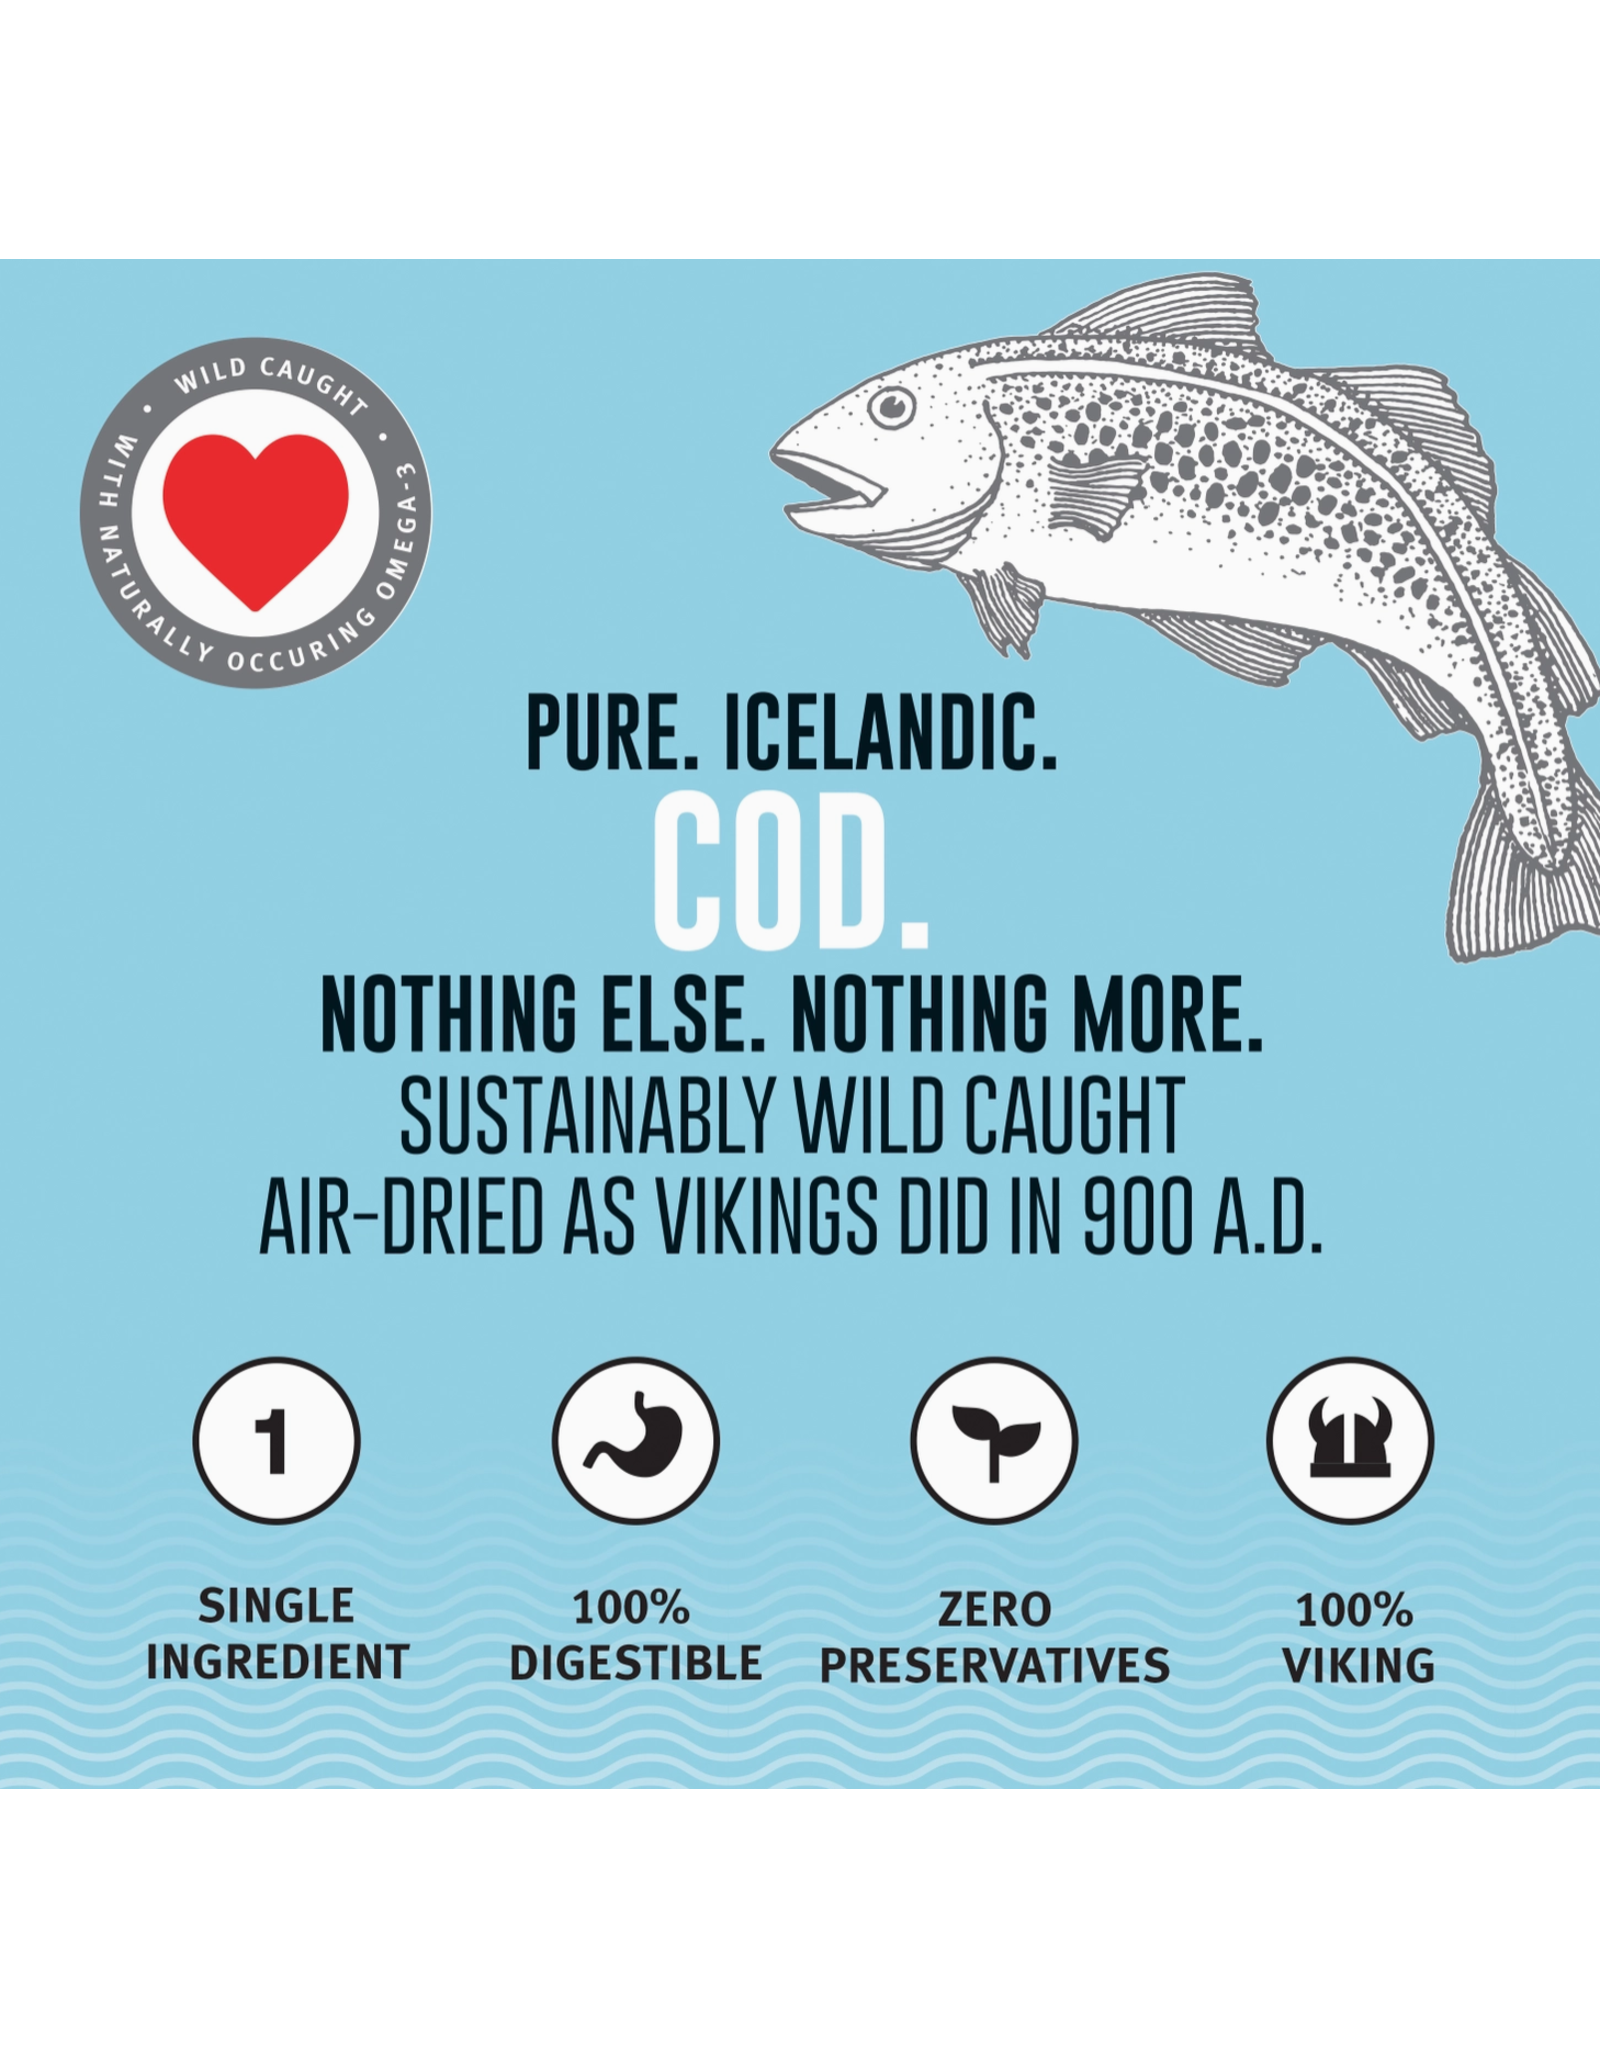 Icelandic+ Icelandic+ Cod Skin Rolls Dog Treats 3.0-oz Bag